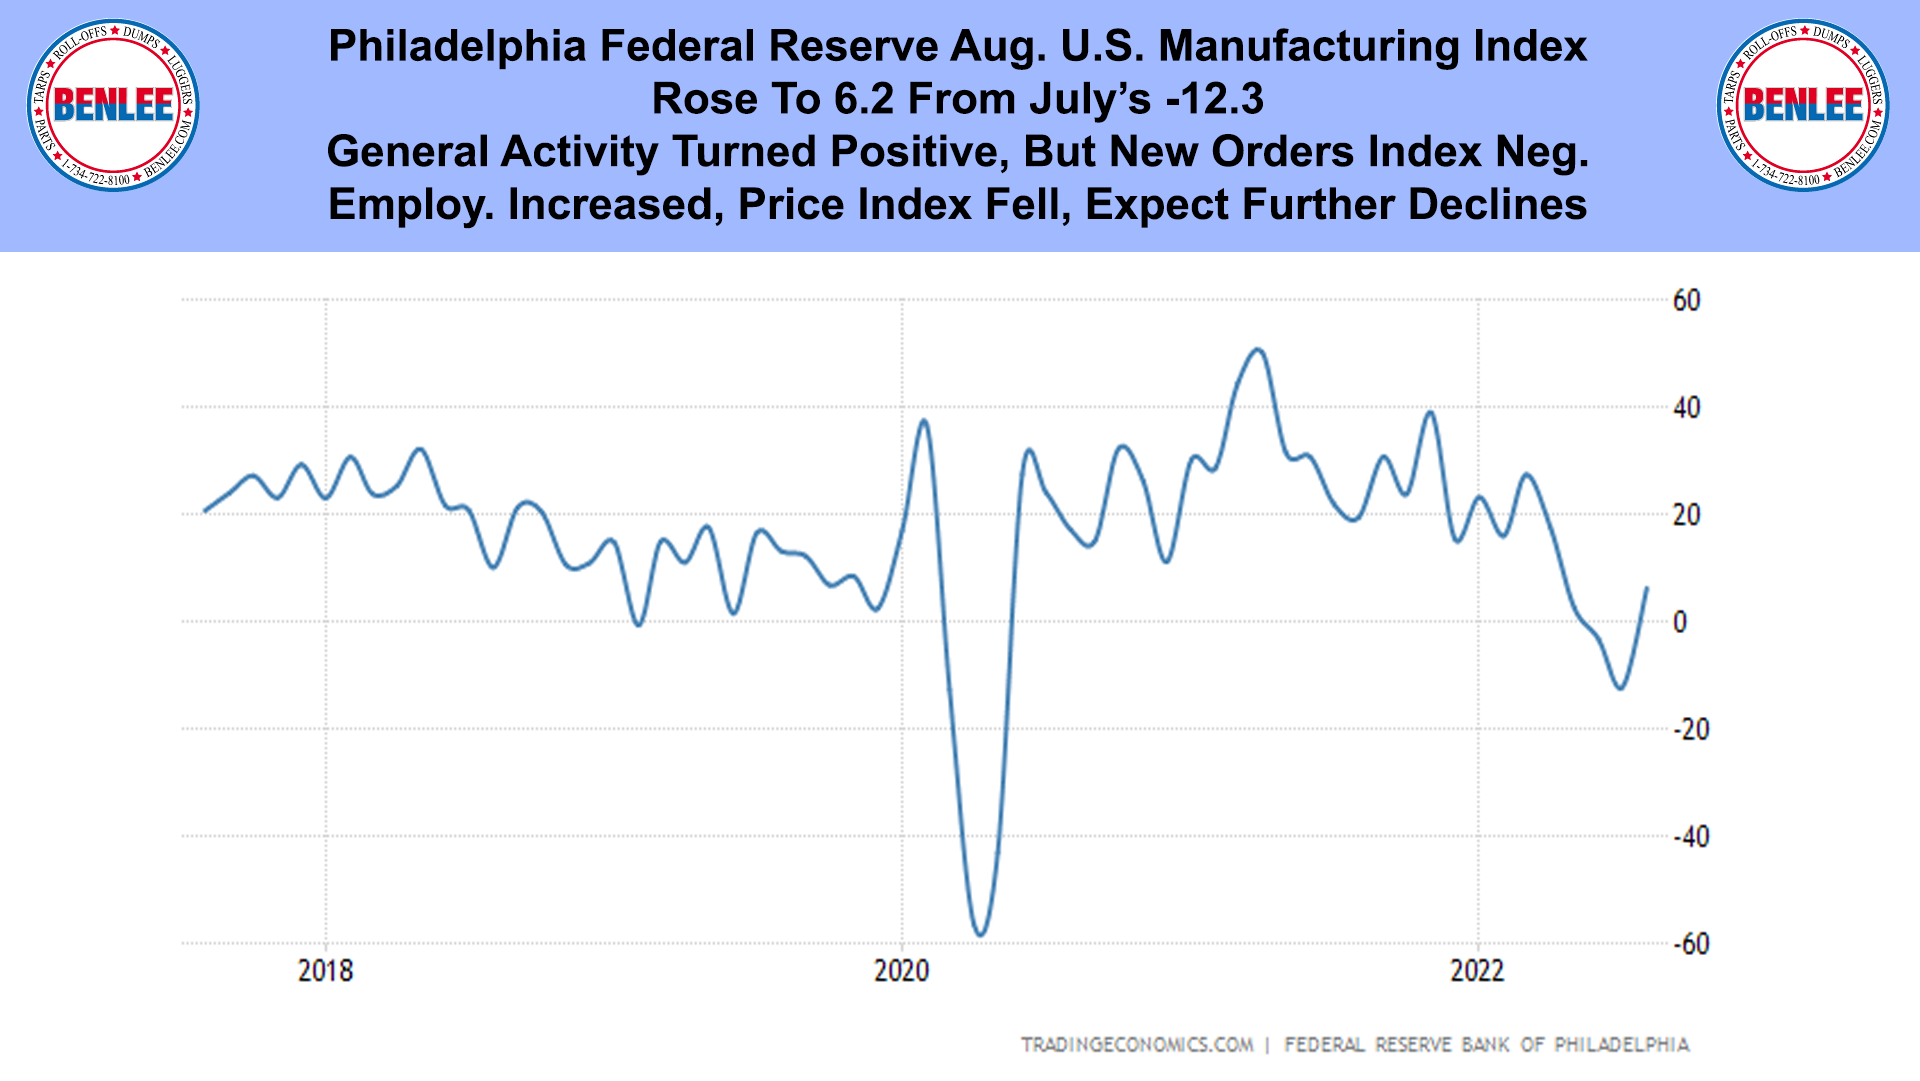 Philadelphia Federal Reserve Aug. U.S. Manufacturing Index copy